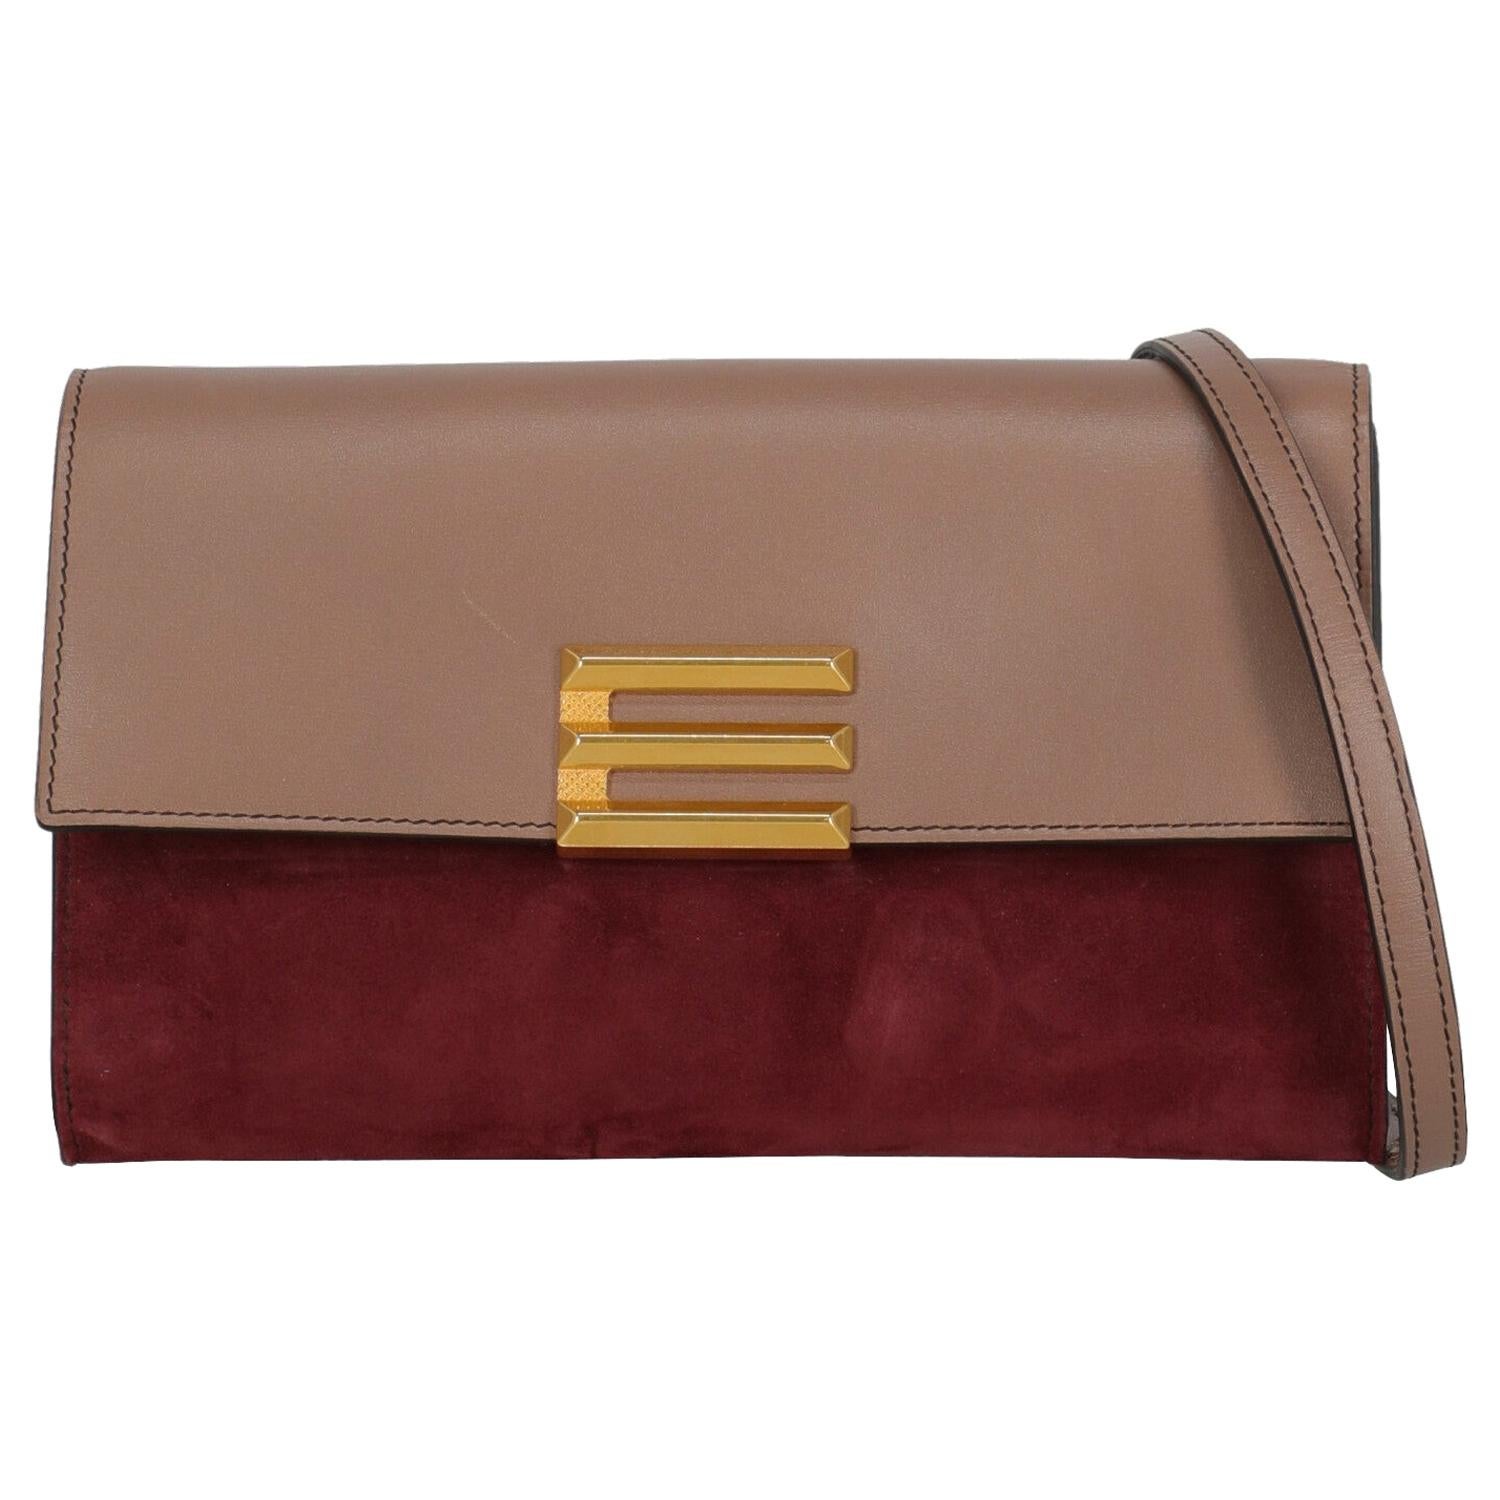 Etro Woman Shoulder bag Burgundy Leather For Sale